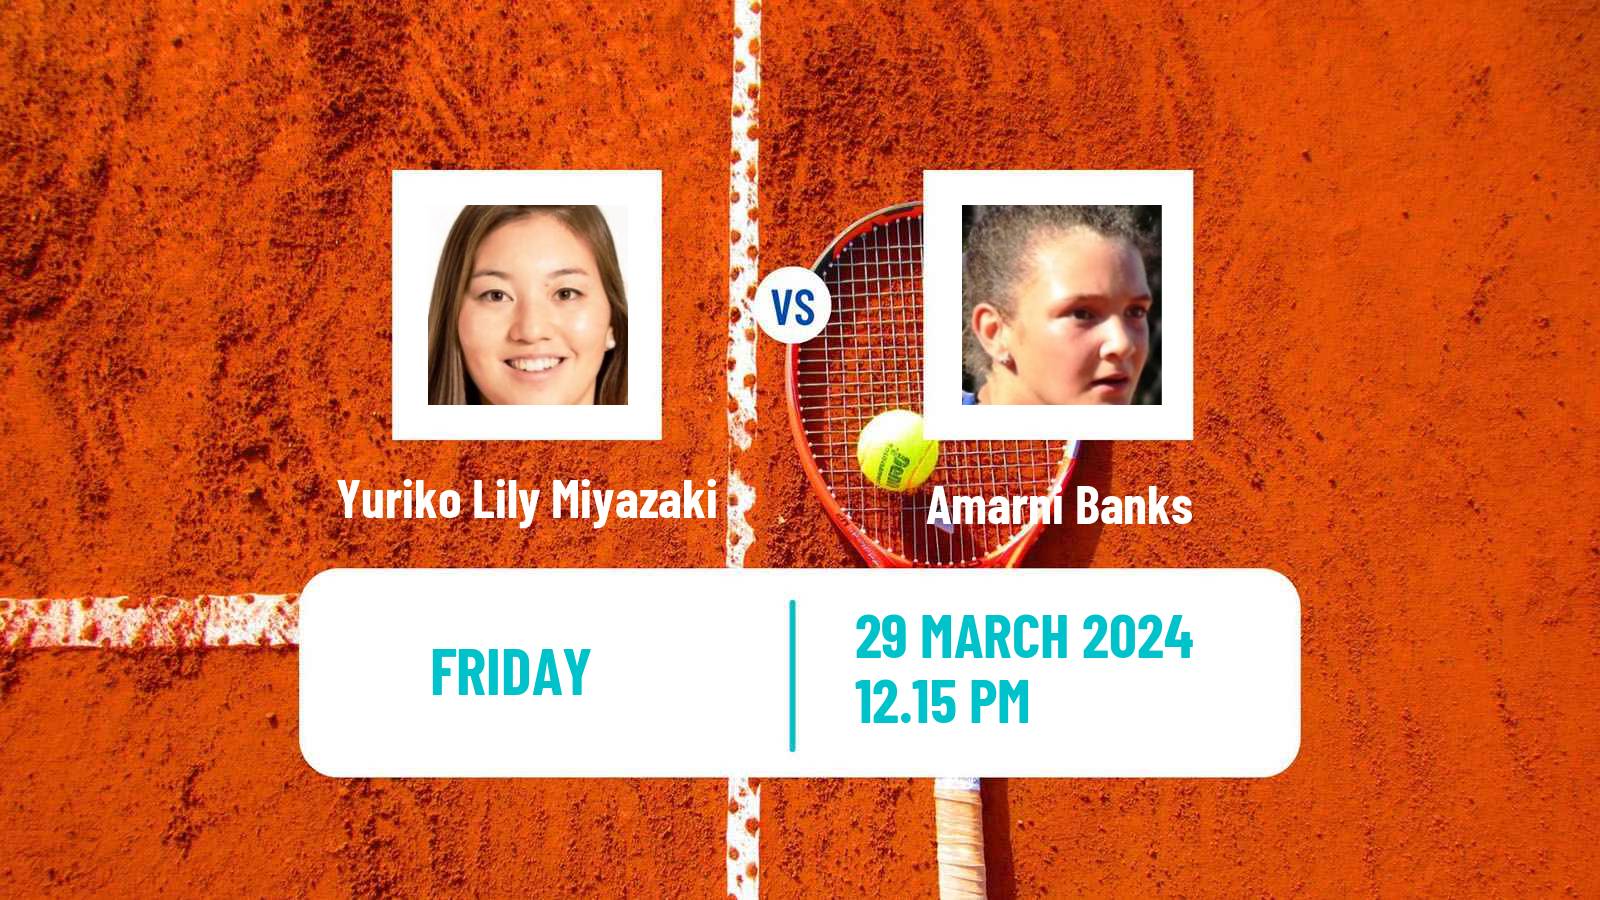 Tennis ITF W75 Croissy Beaubourg Women Yuriko Lily Miyazaki - Amarni Banks